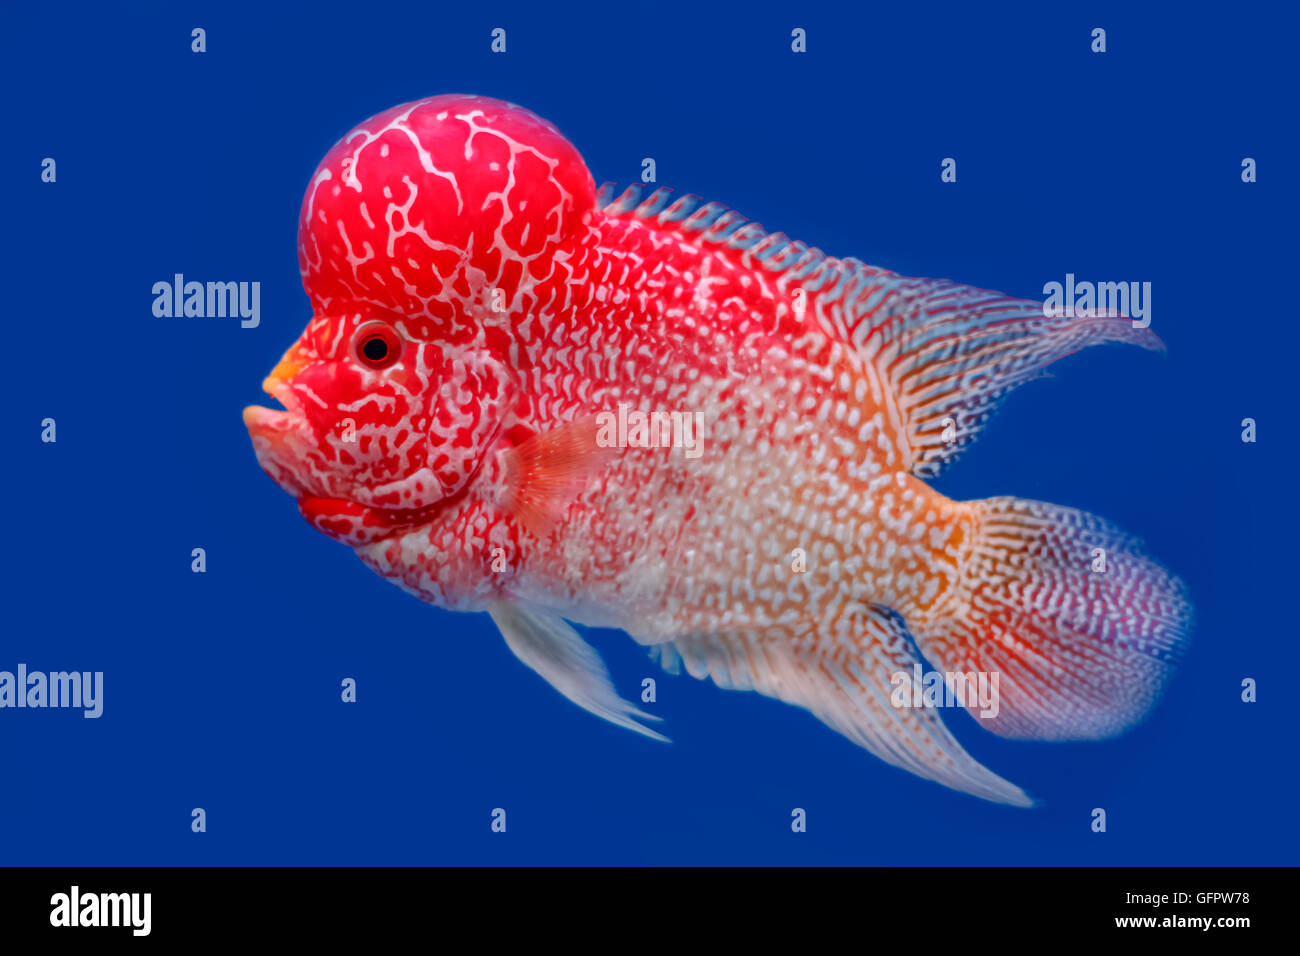 Close up Flowerhorn Cichlid fish on blue background Stock Photo